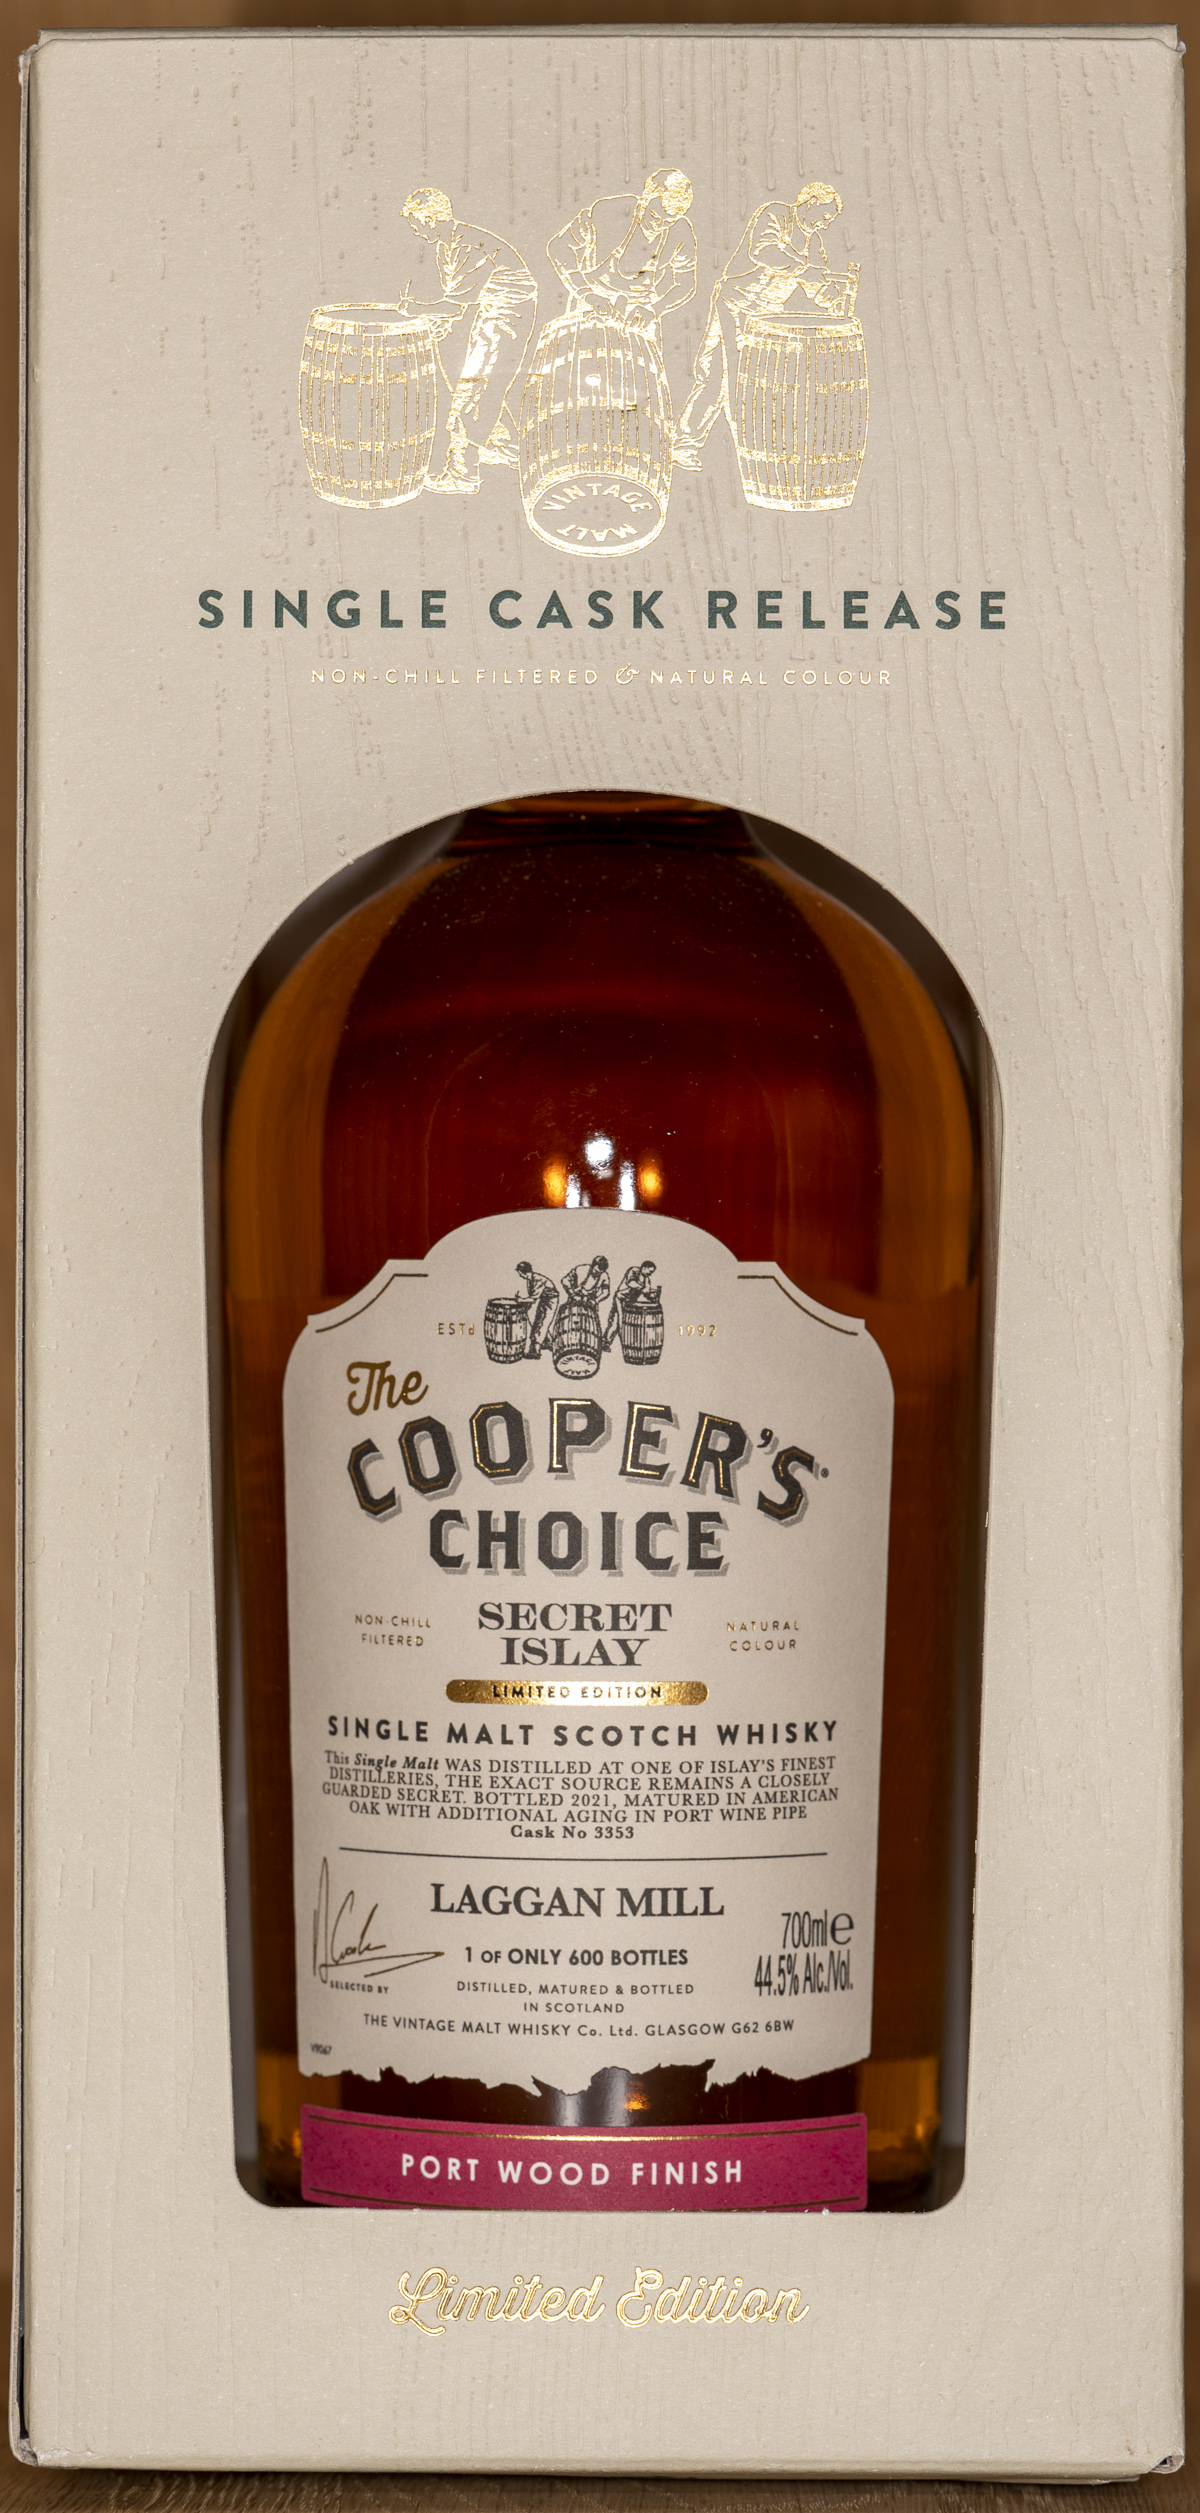 Billede: DSC_5043 - The Coopers Choice Secret Islay Laggan Mill - box front.jpg